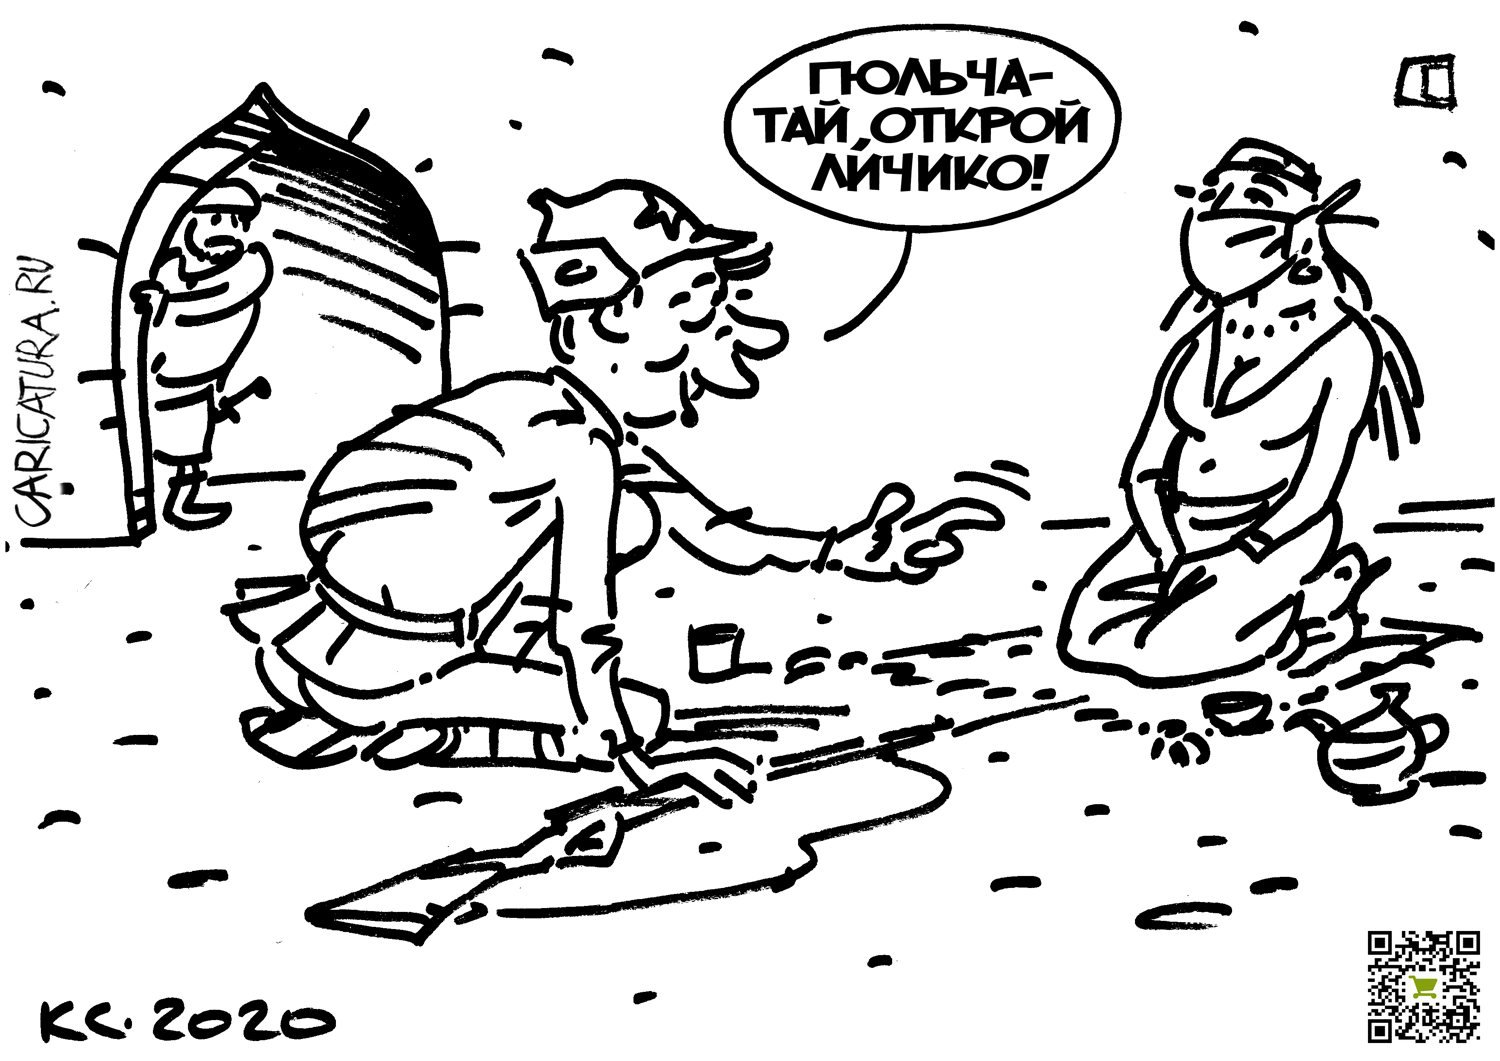 Карикатура "Гюльчатай, открой личико!", Вячеслав Капрельянц